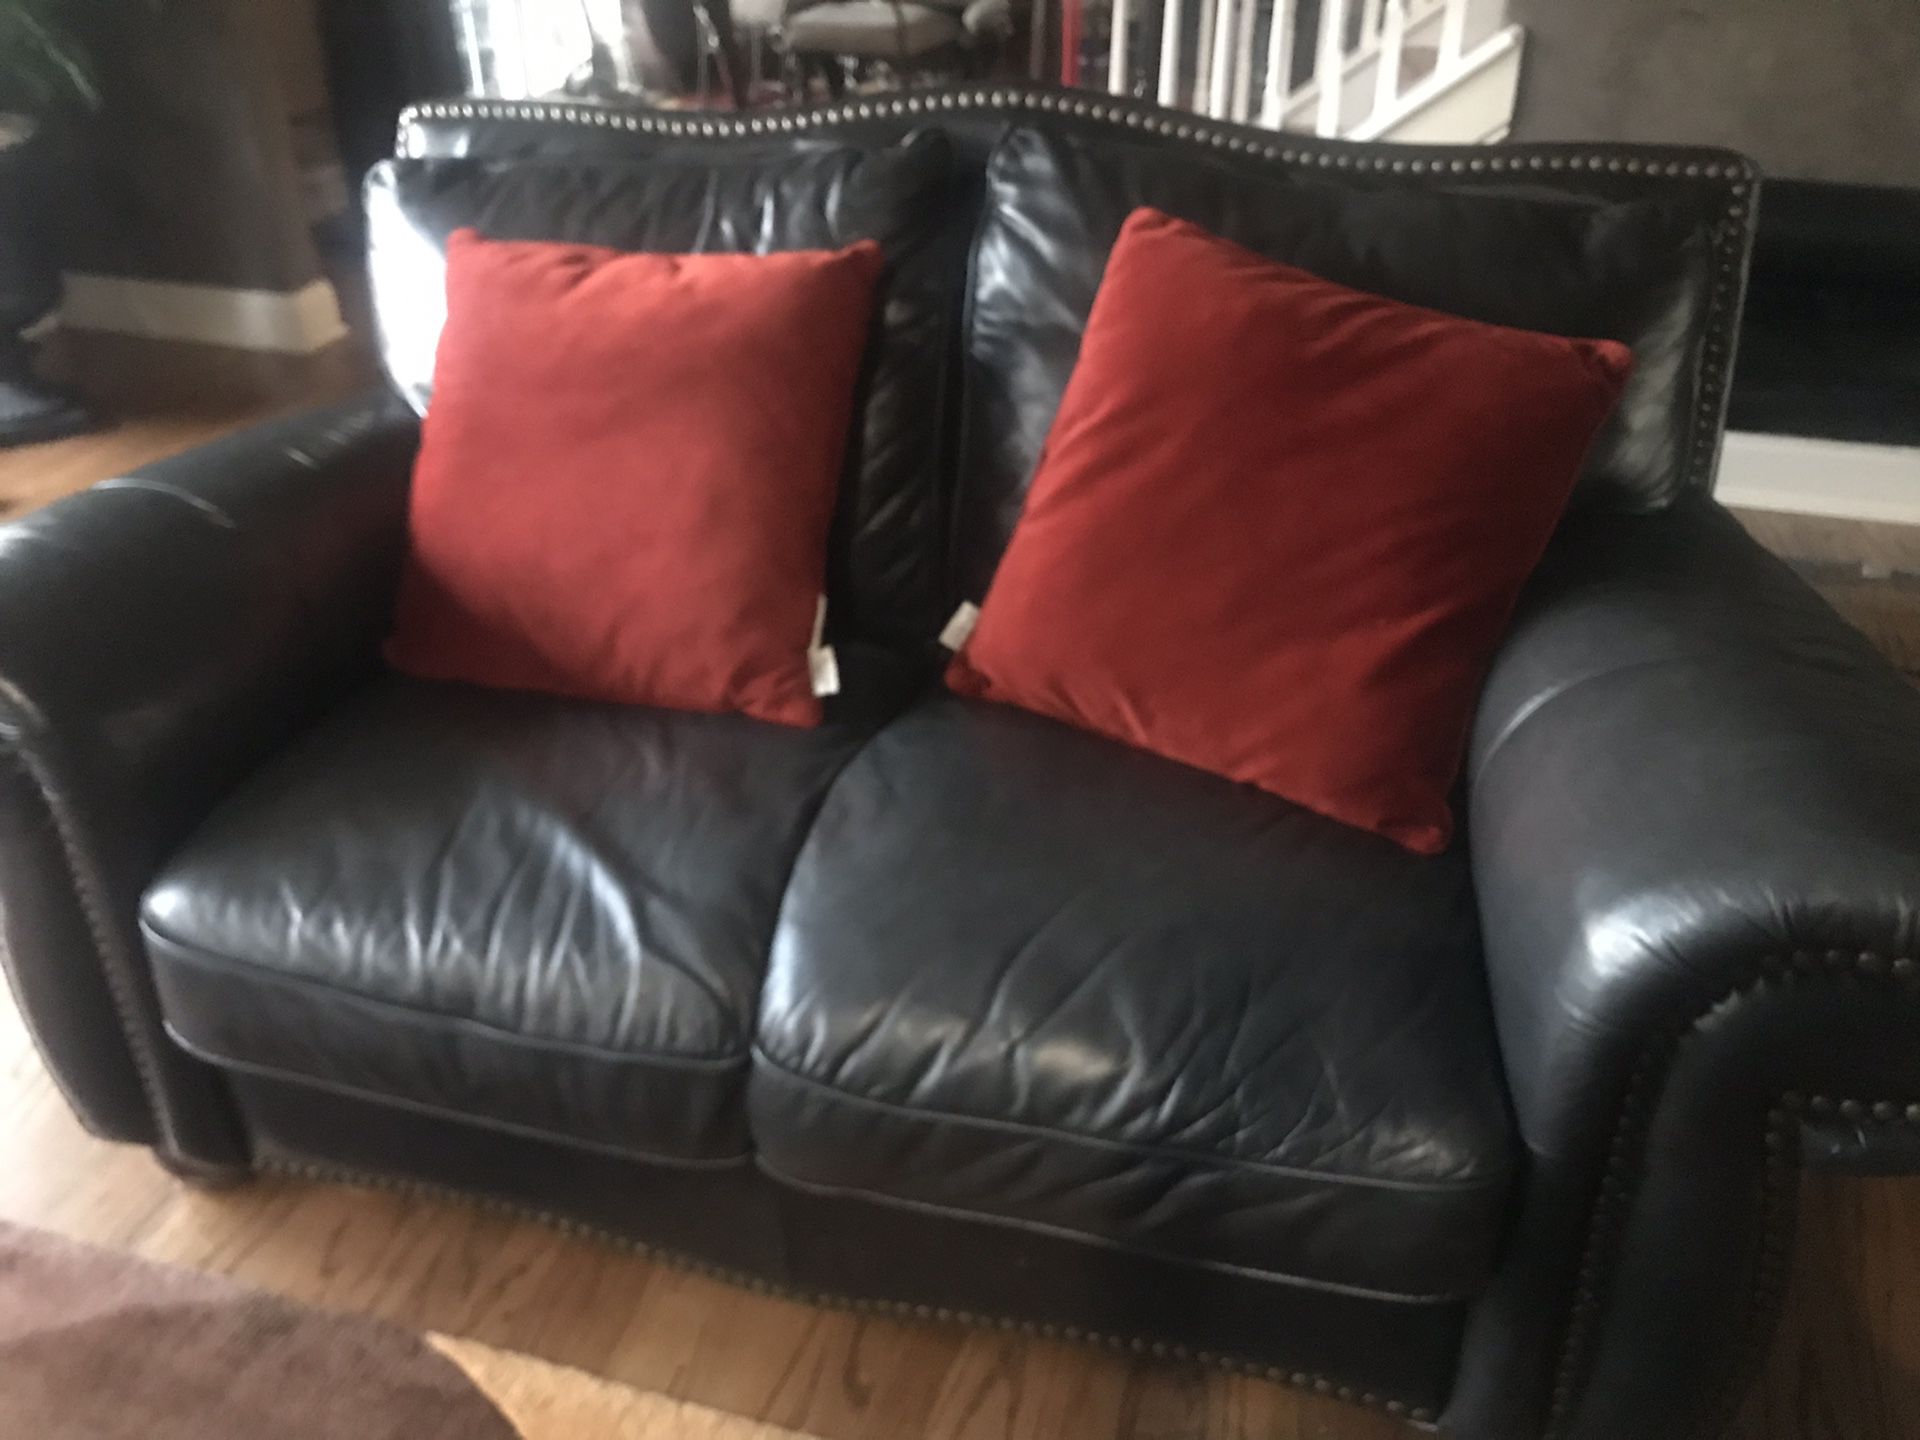 Black Leather sofa